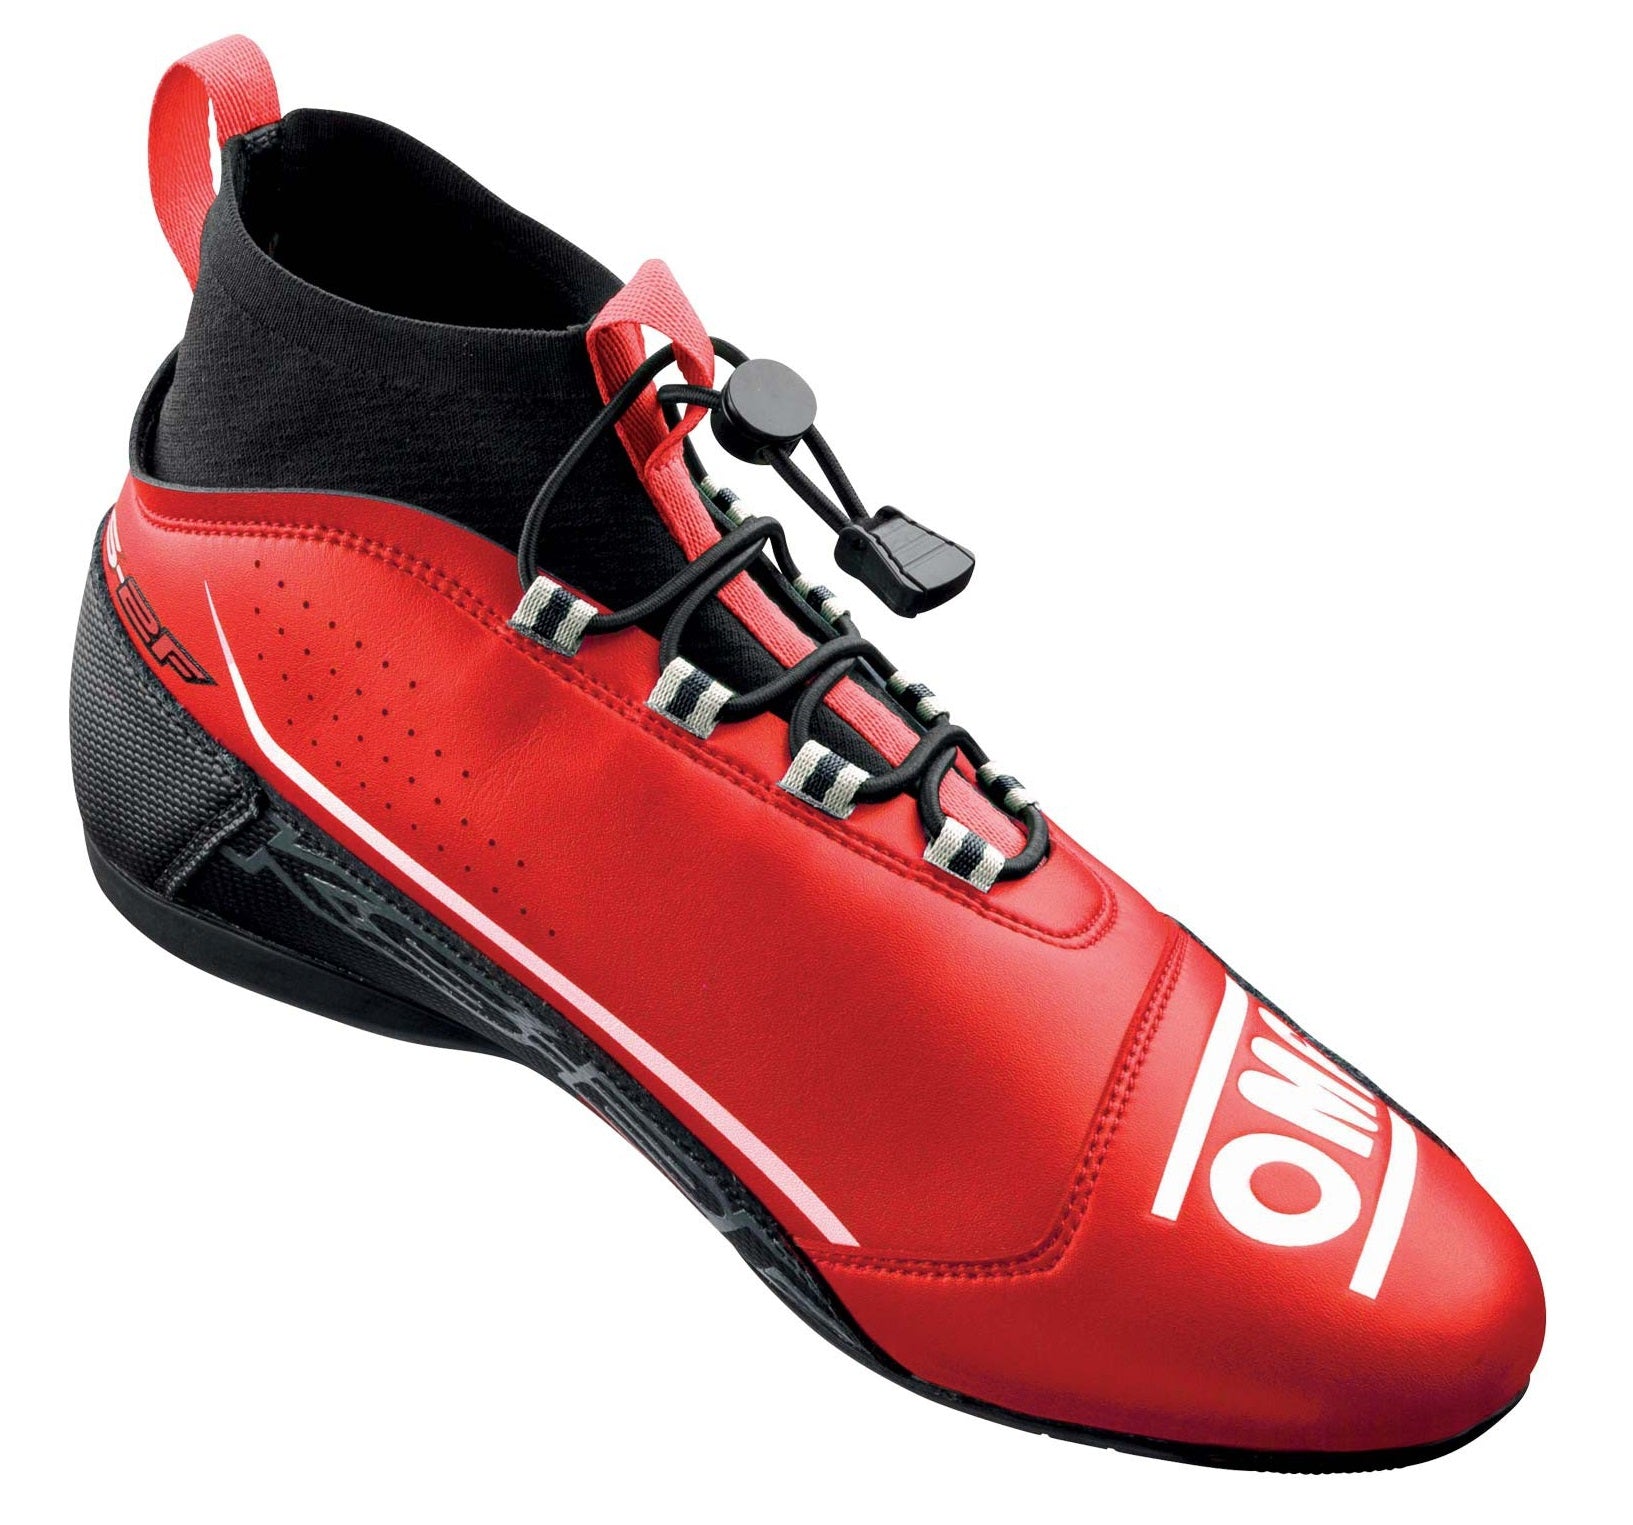 OMP KC0-0830-A01-060-41 KS-2F Karting shoes, red/black, size 41 Photo-1 